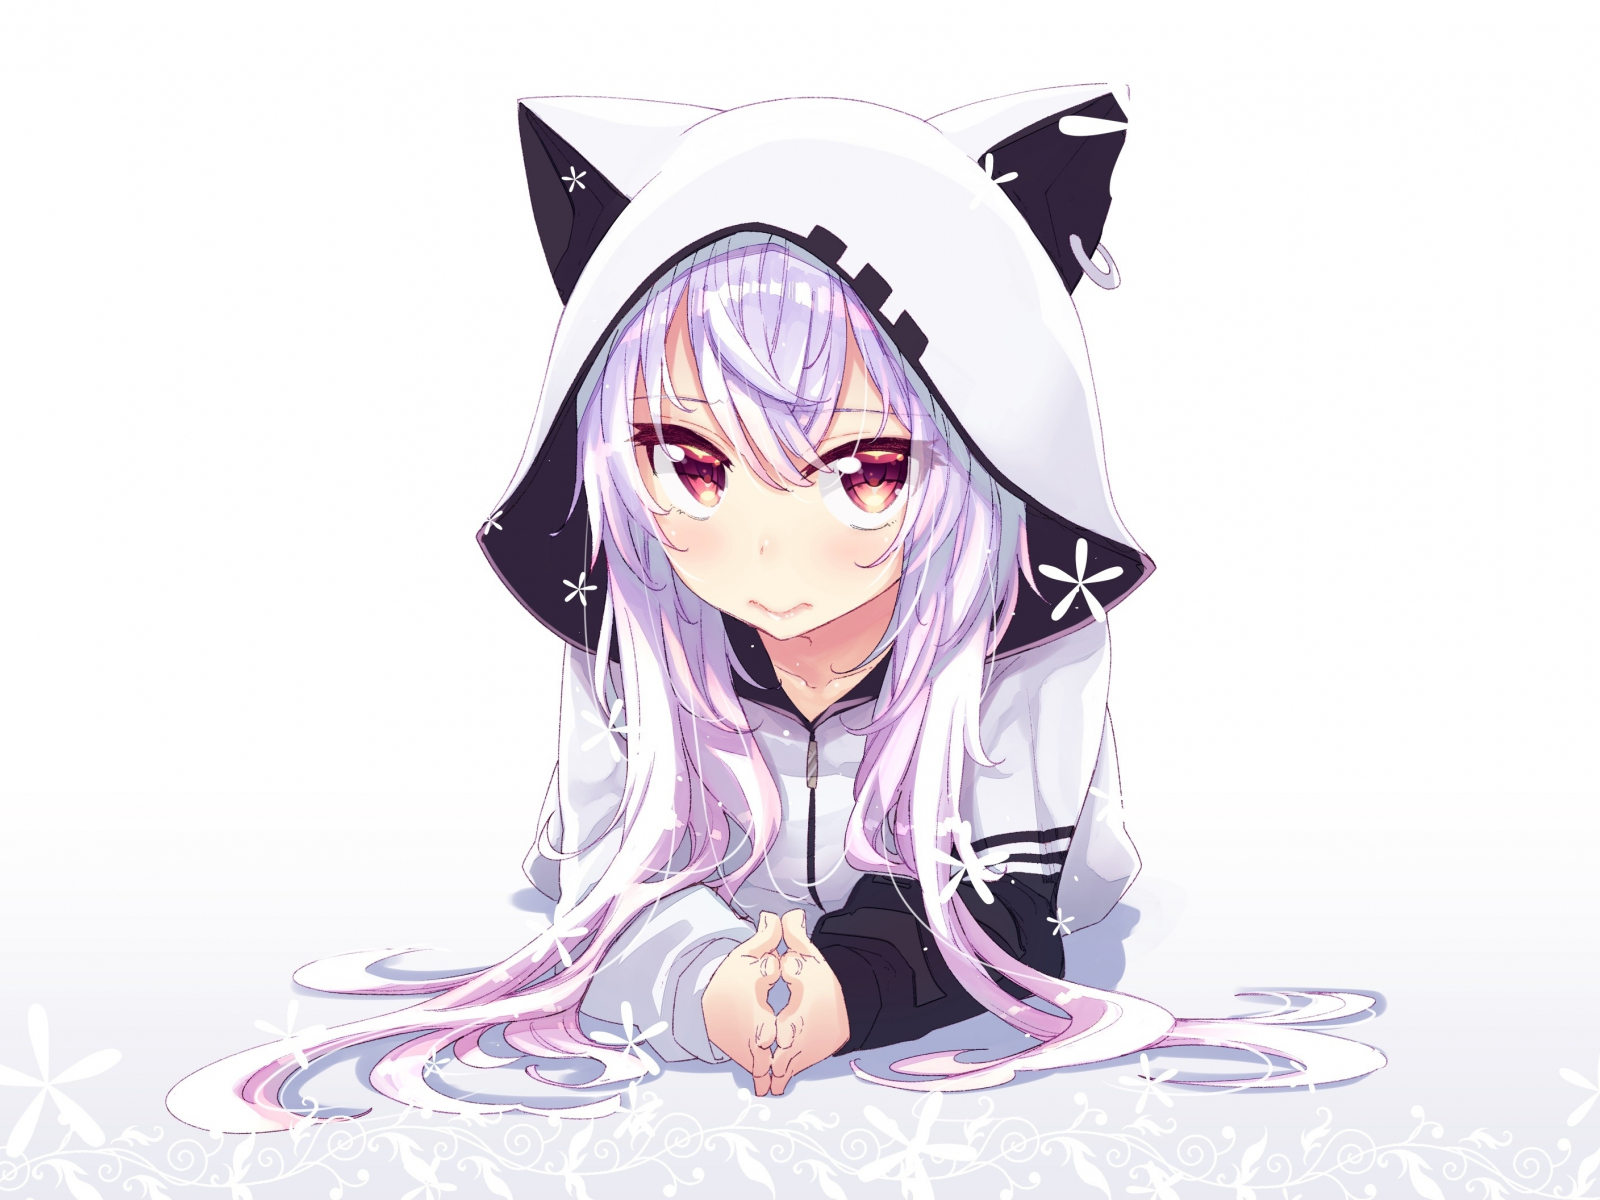 Download wallpaper 1600x1200 azuma lim, anime girl, white hoodie, standard  4:3 fullscreen 1600x1200 hd background, 7272